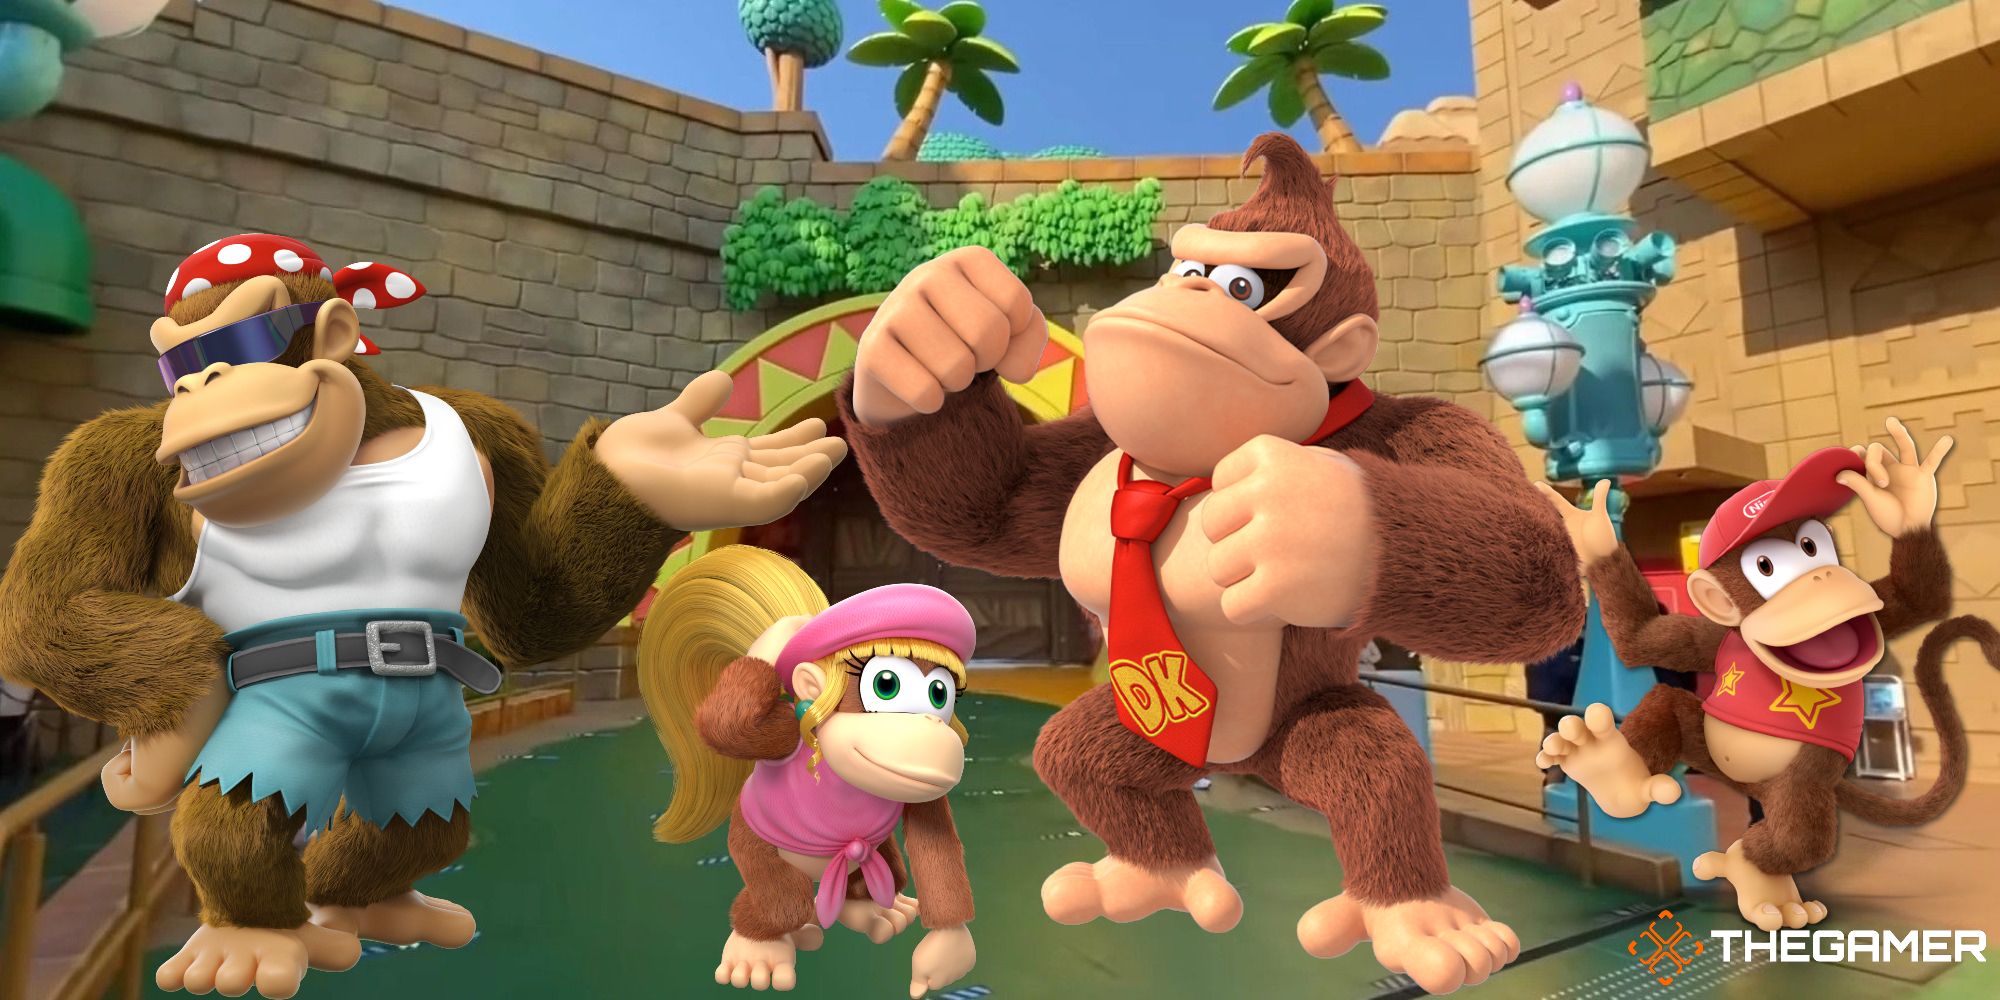 Donkey Kong family expansion at Super Nintendo World